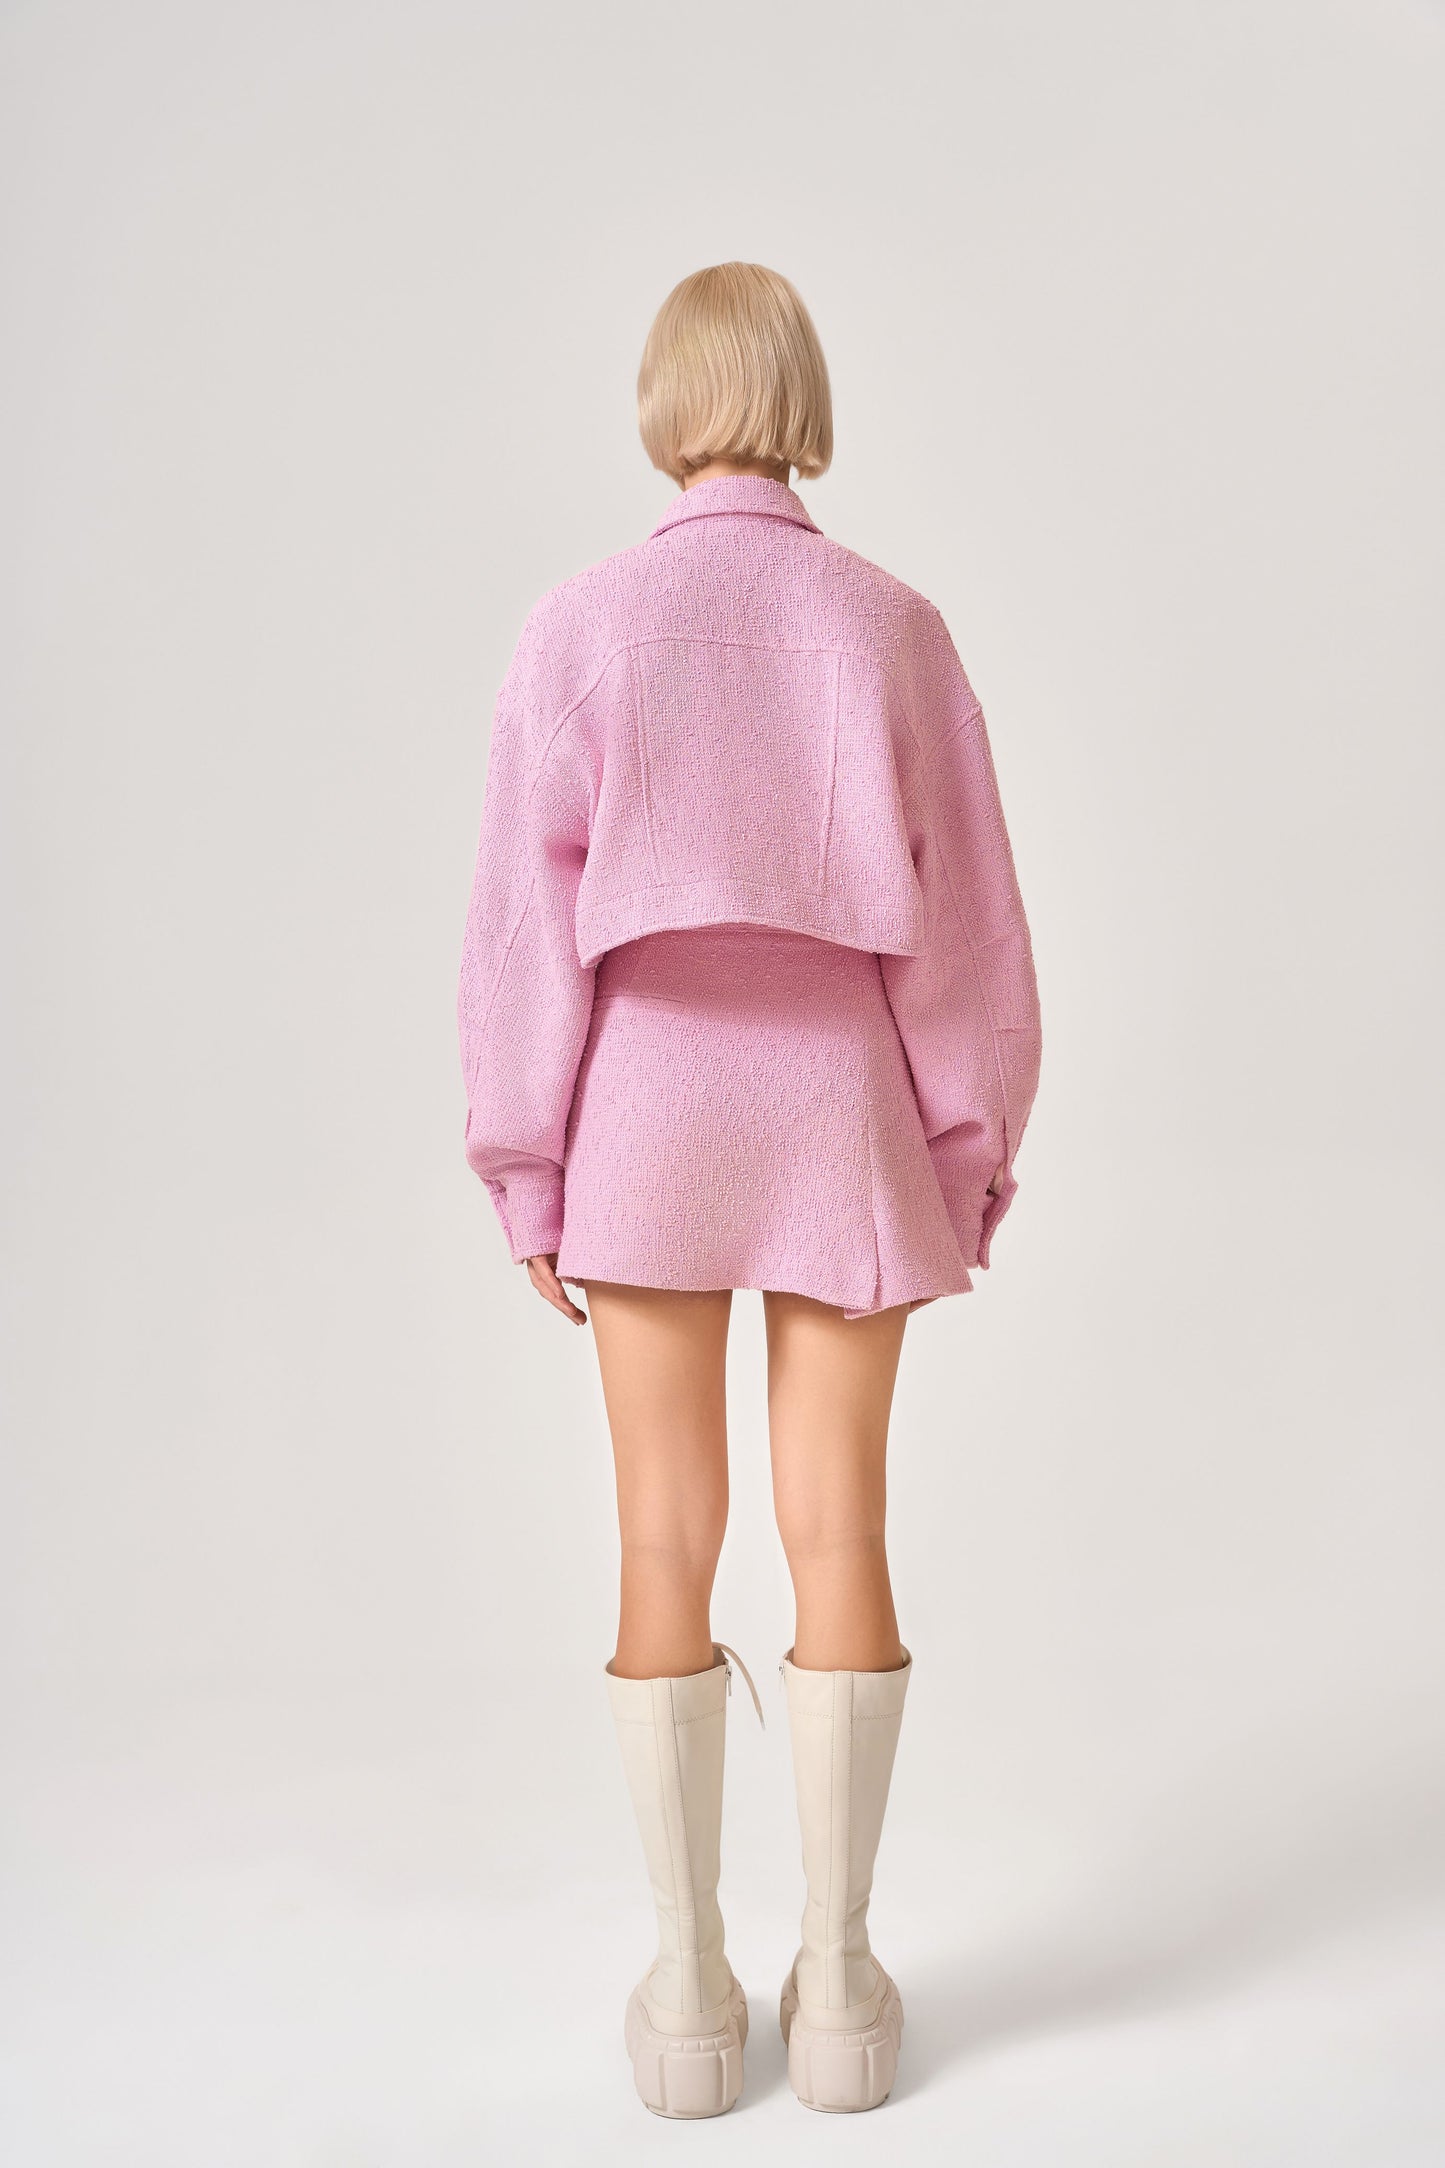 Coarse Yarn Asymmetrical Short Skirt